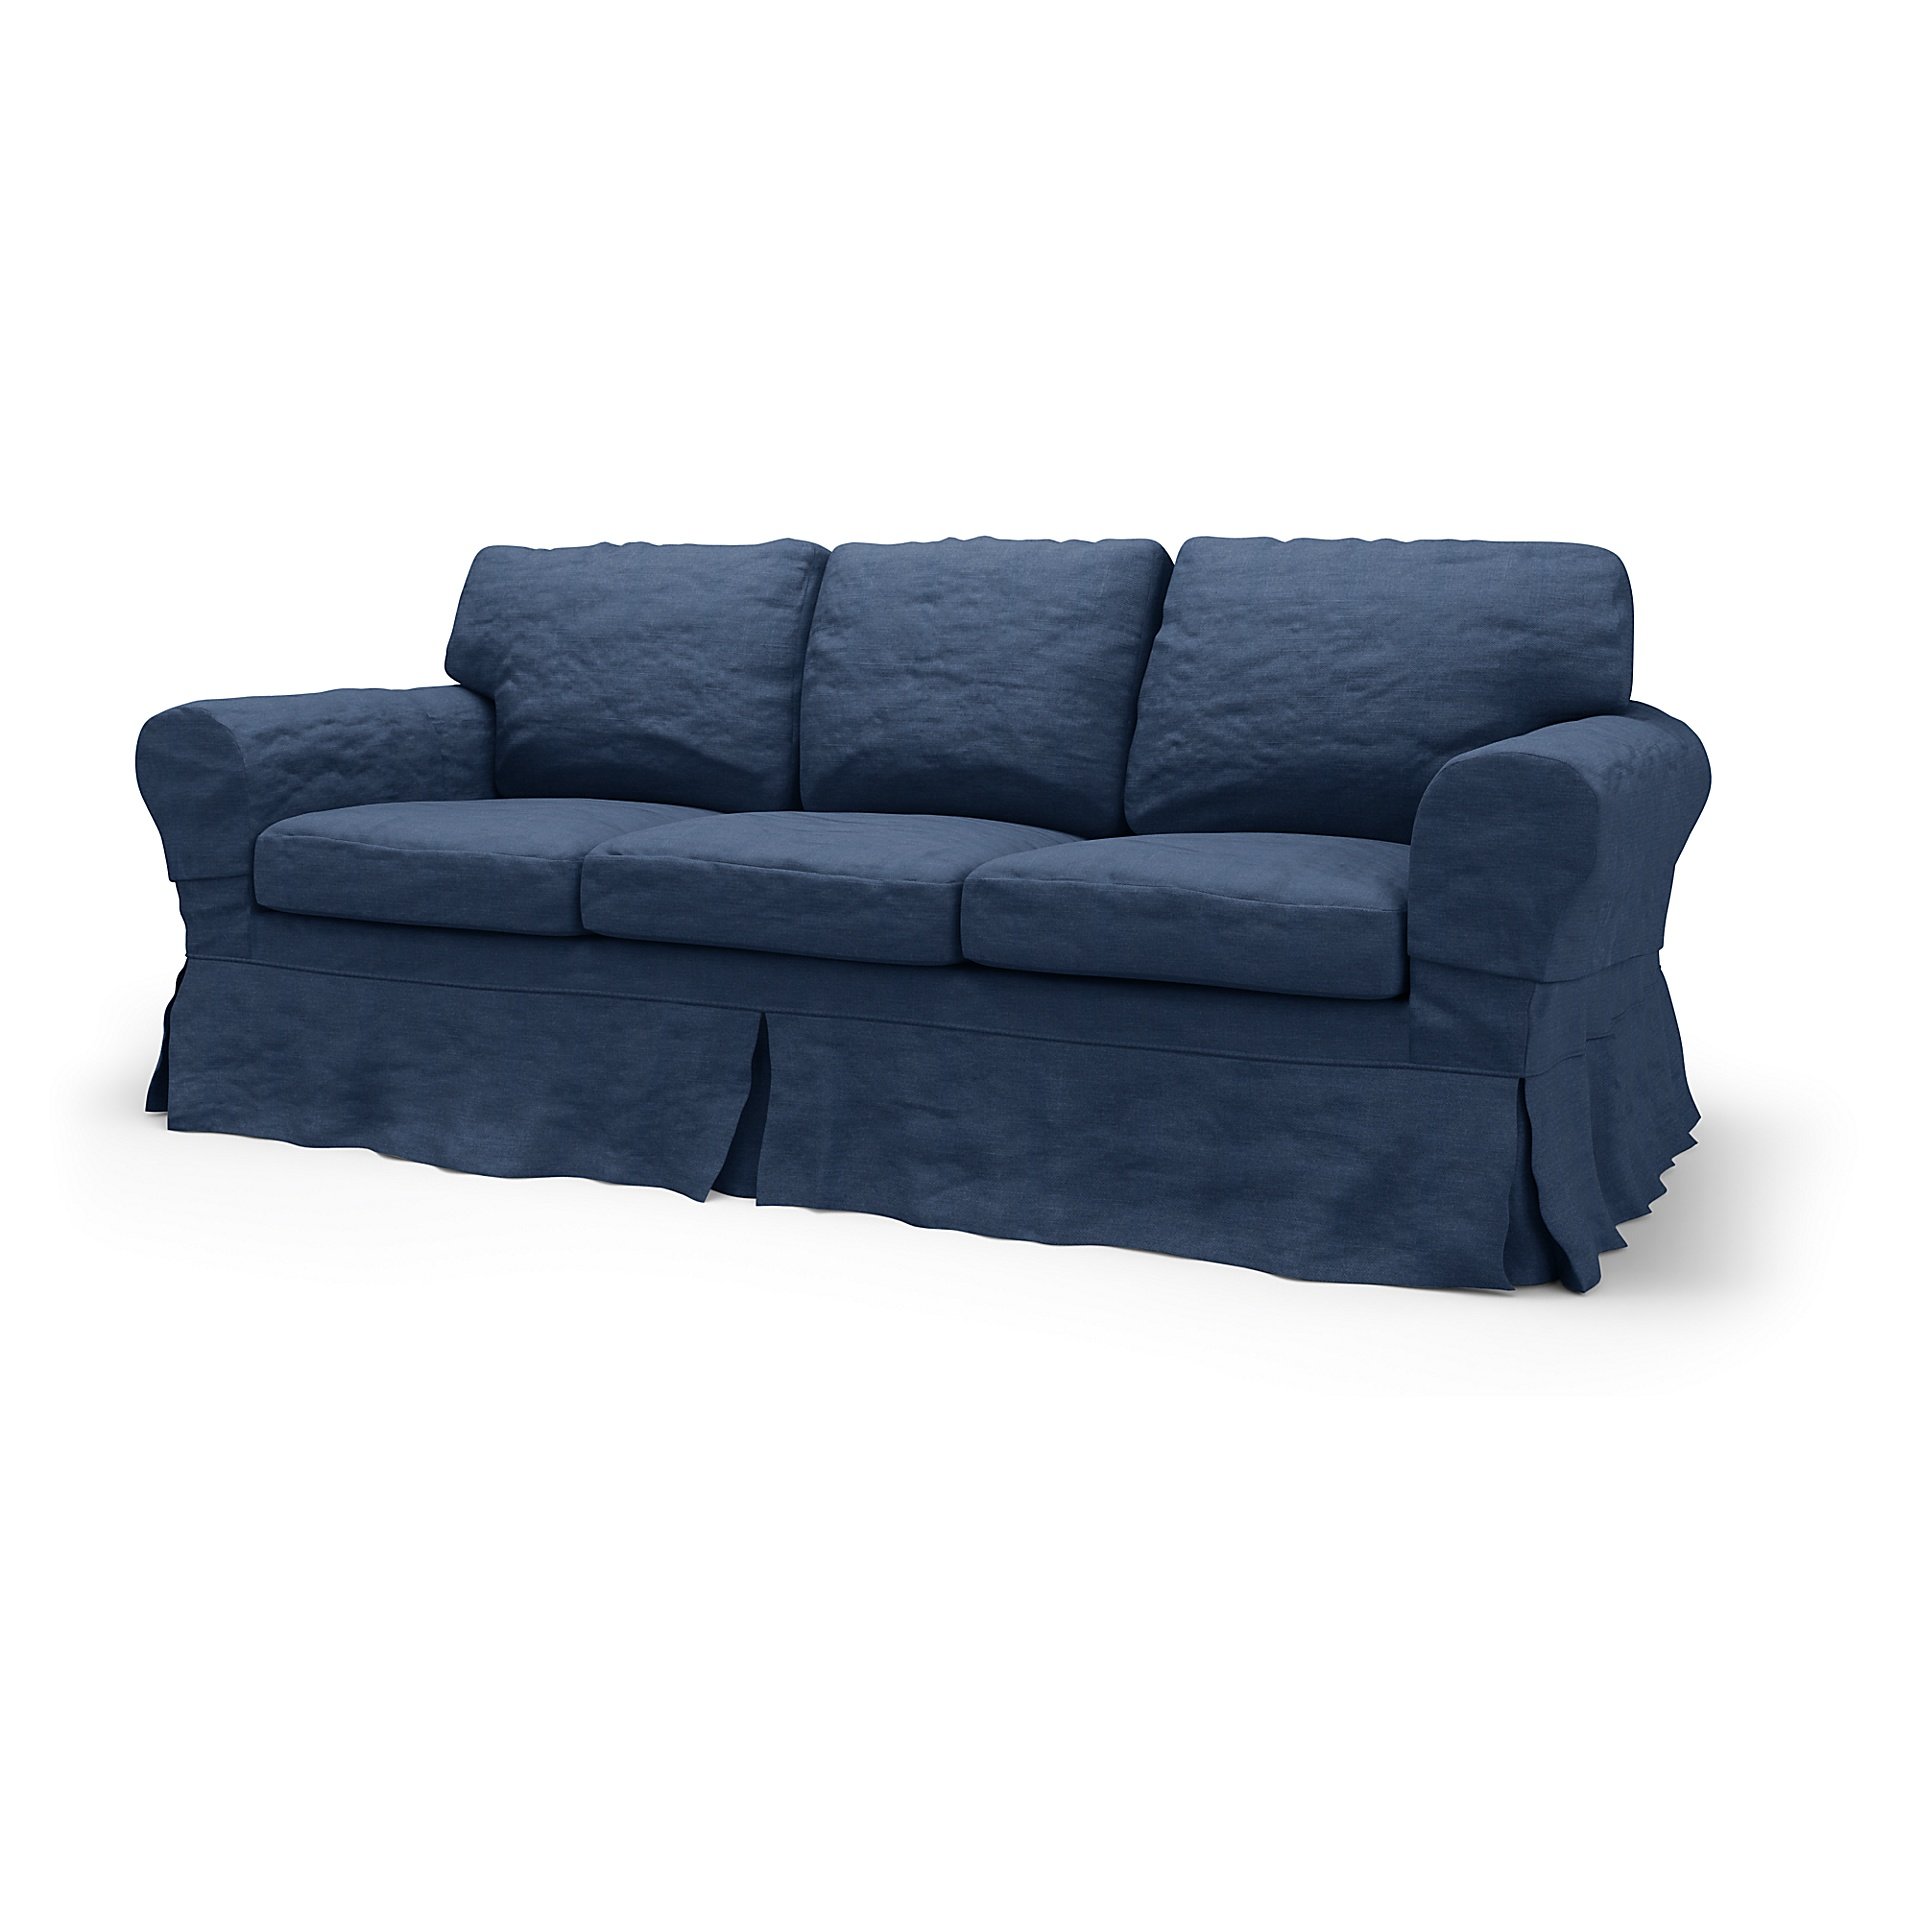 IKEA - Ektorp 3 Seater Sofa Bed Cover, Navy Blue, Linen - Bemz